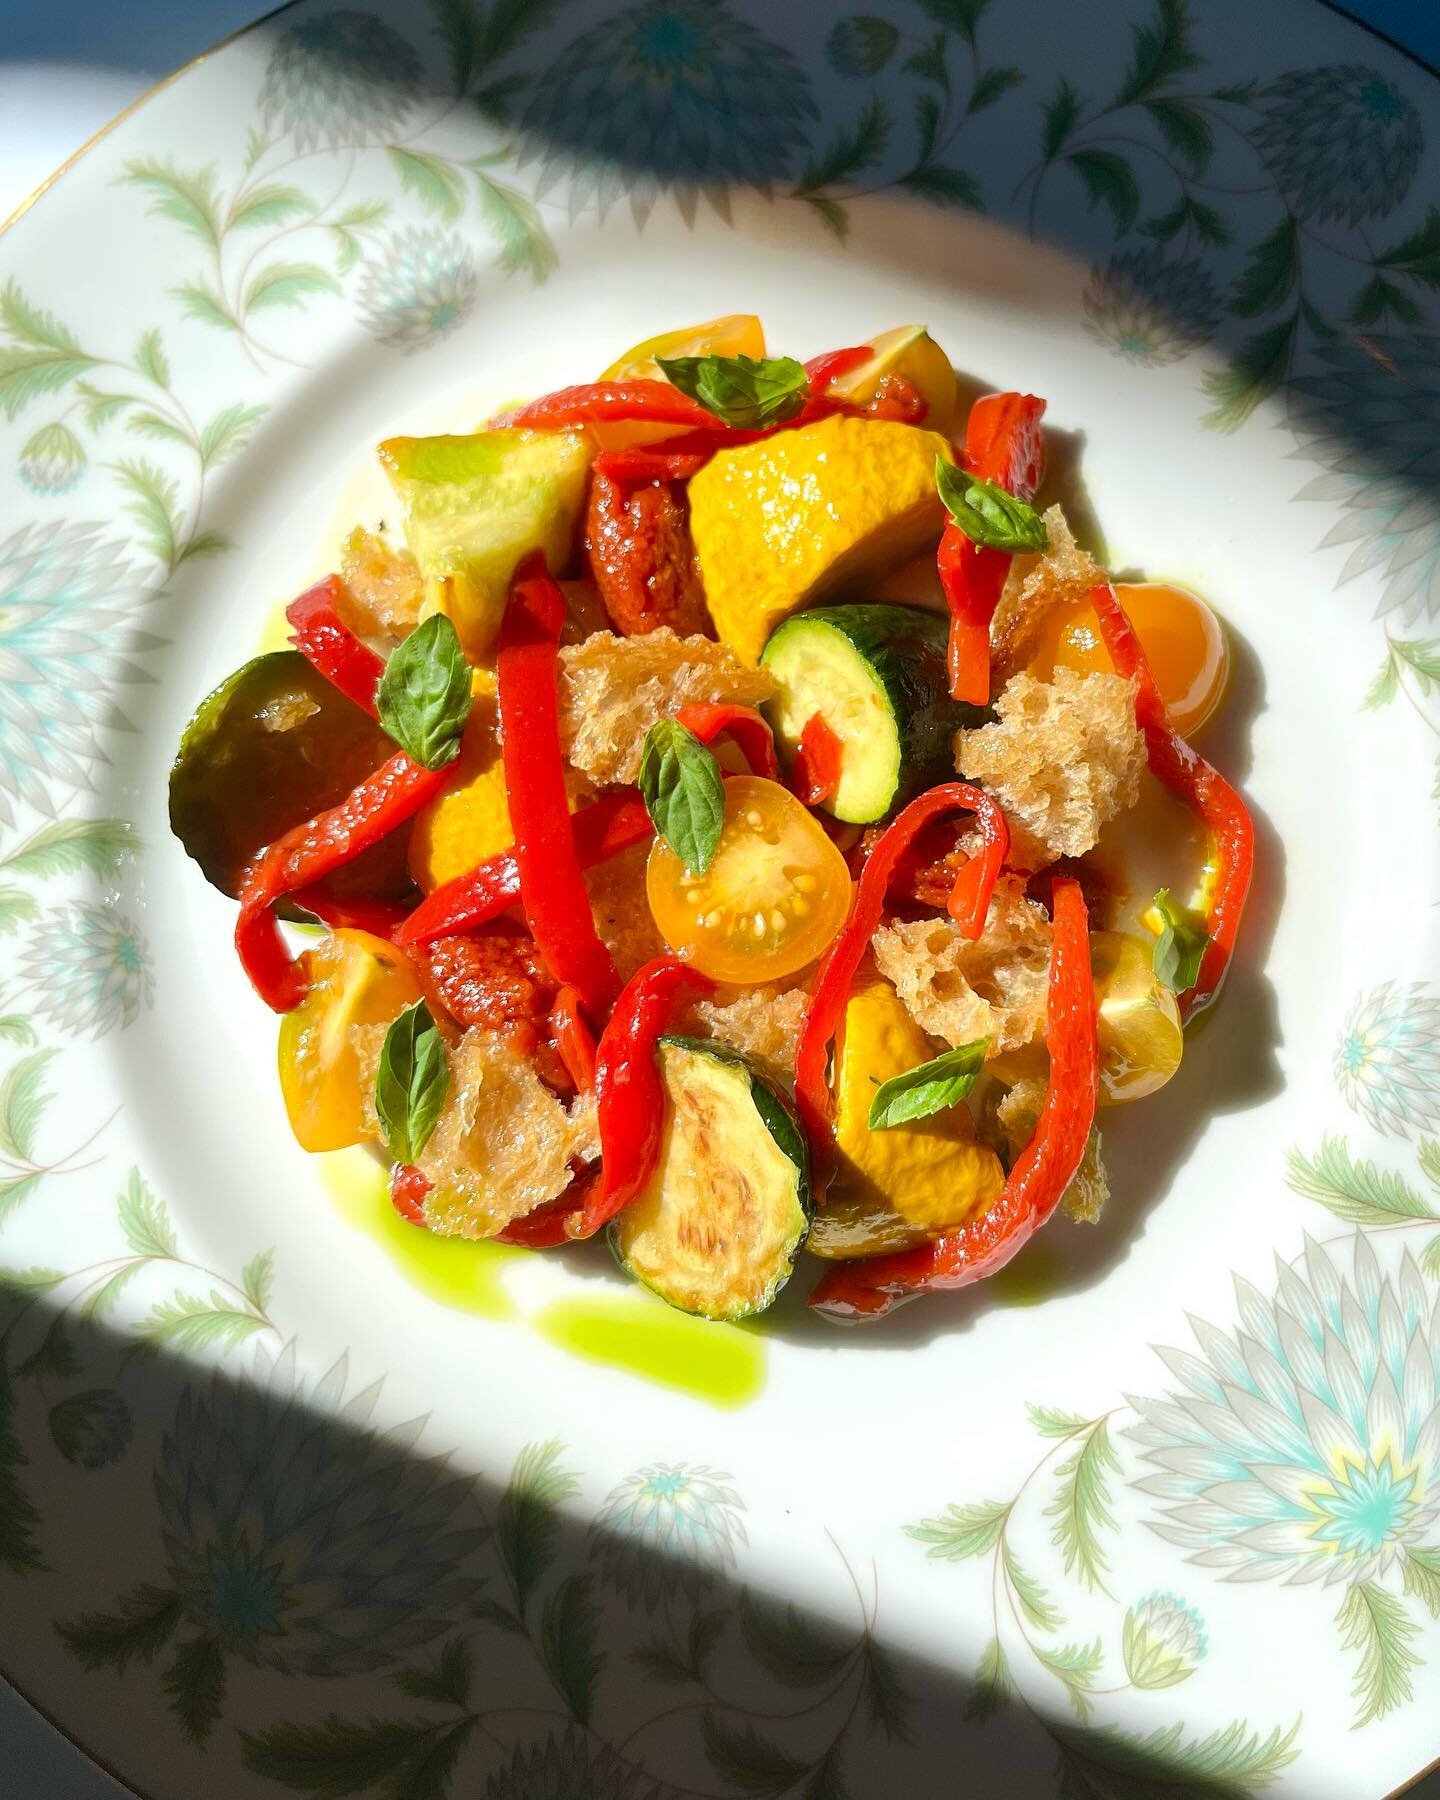 SUMMER RATATOUILLE SALAD// garden vegetables, garlic croutons, basil 🍅🌿

#barmignonette #seasonalveg #mignonette #ratatouille #august #salad